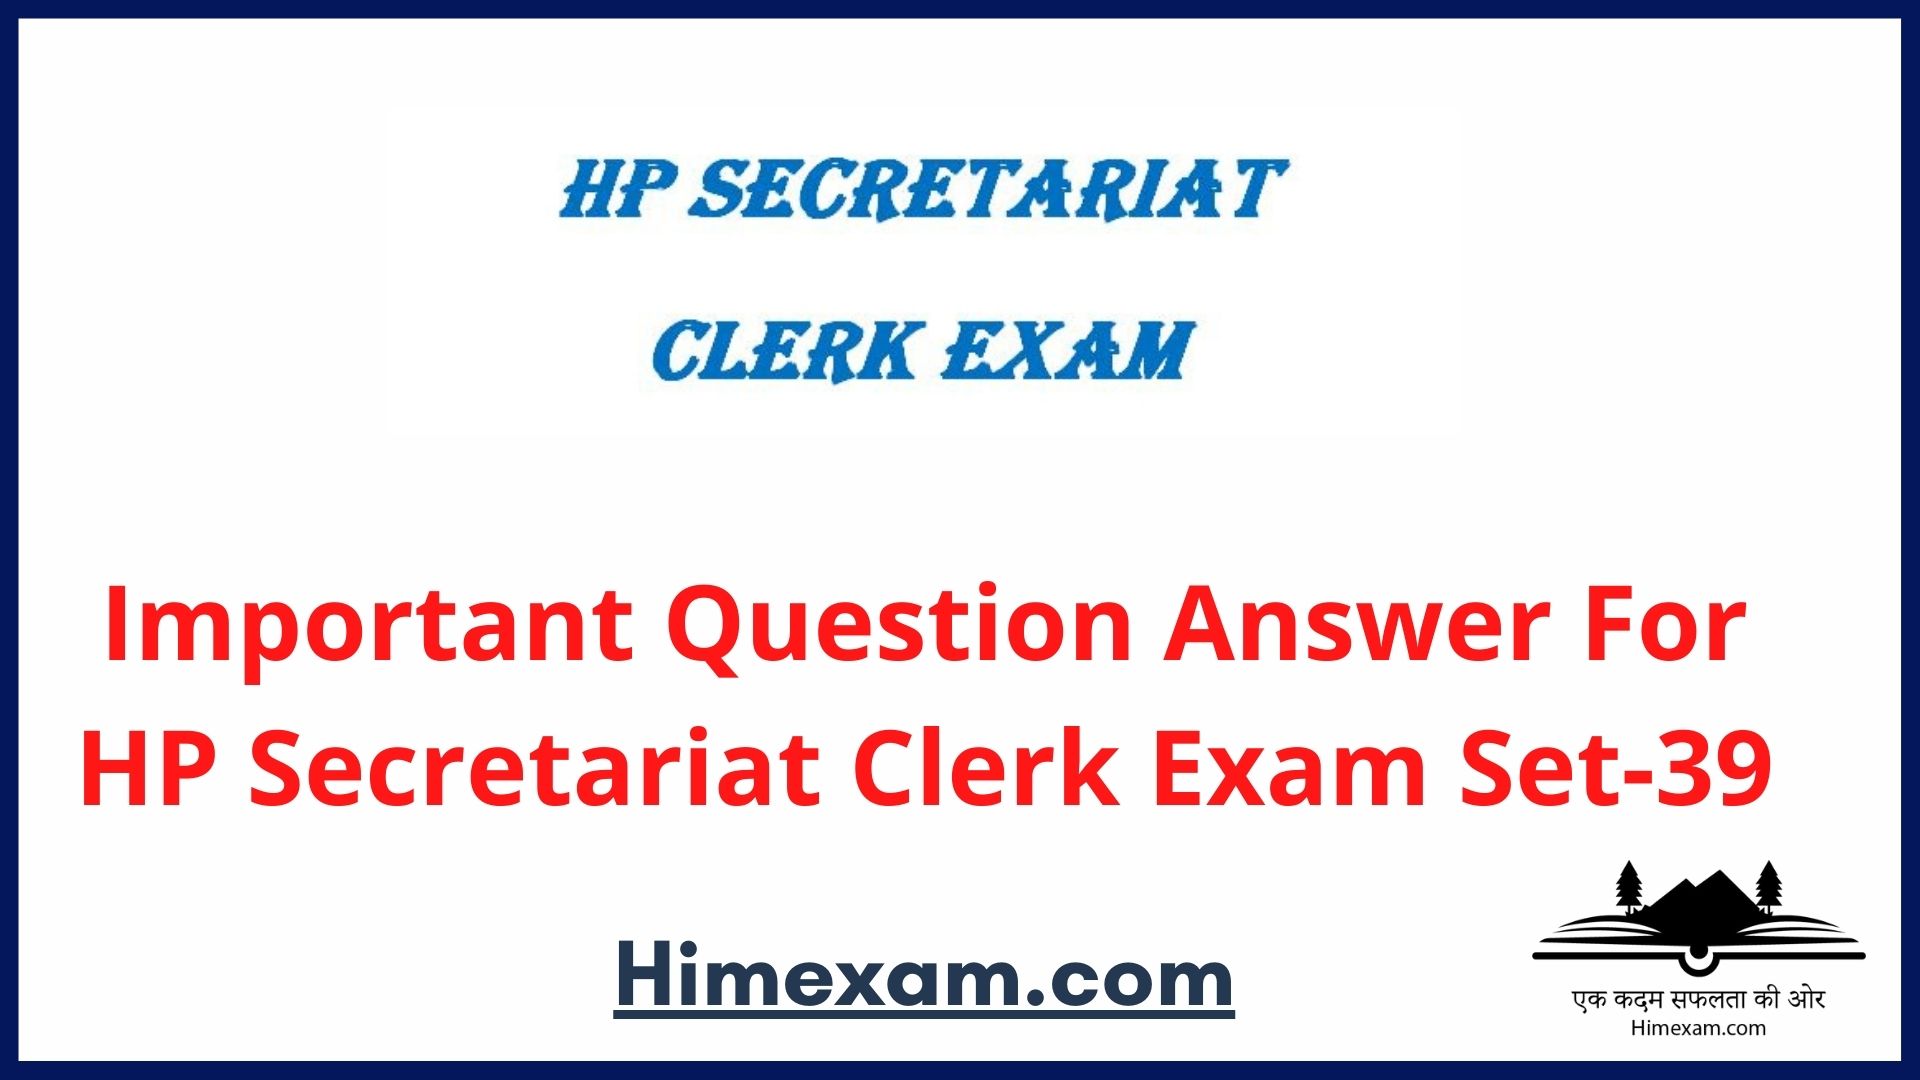 Important Question Answer For HP Secretariat Clerk Exam Set-39